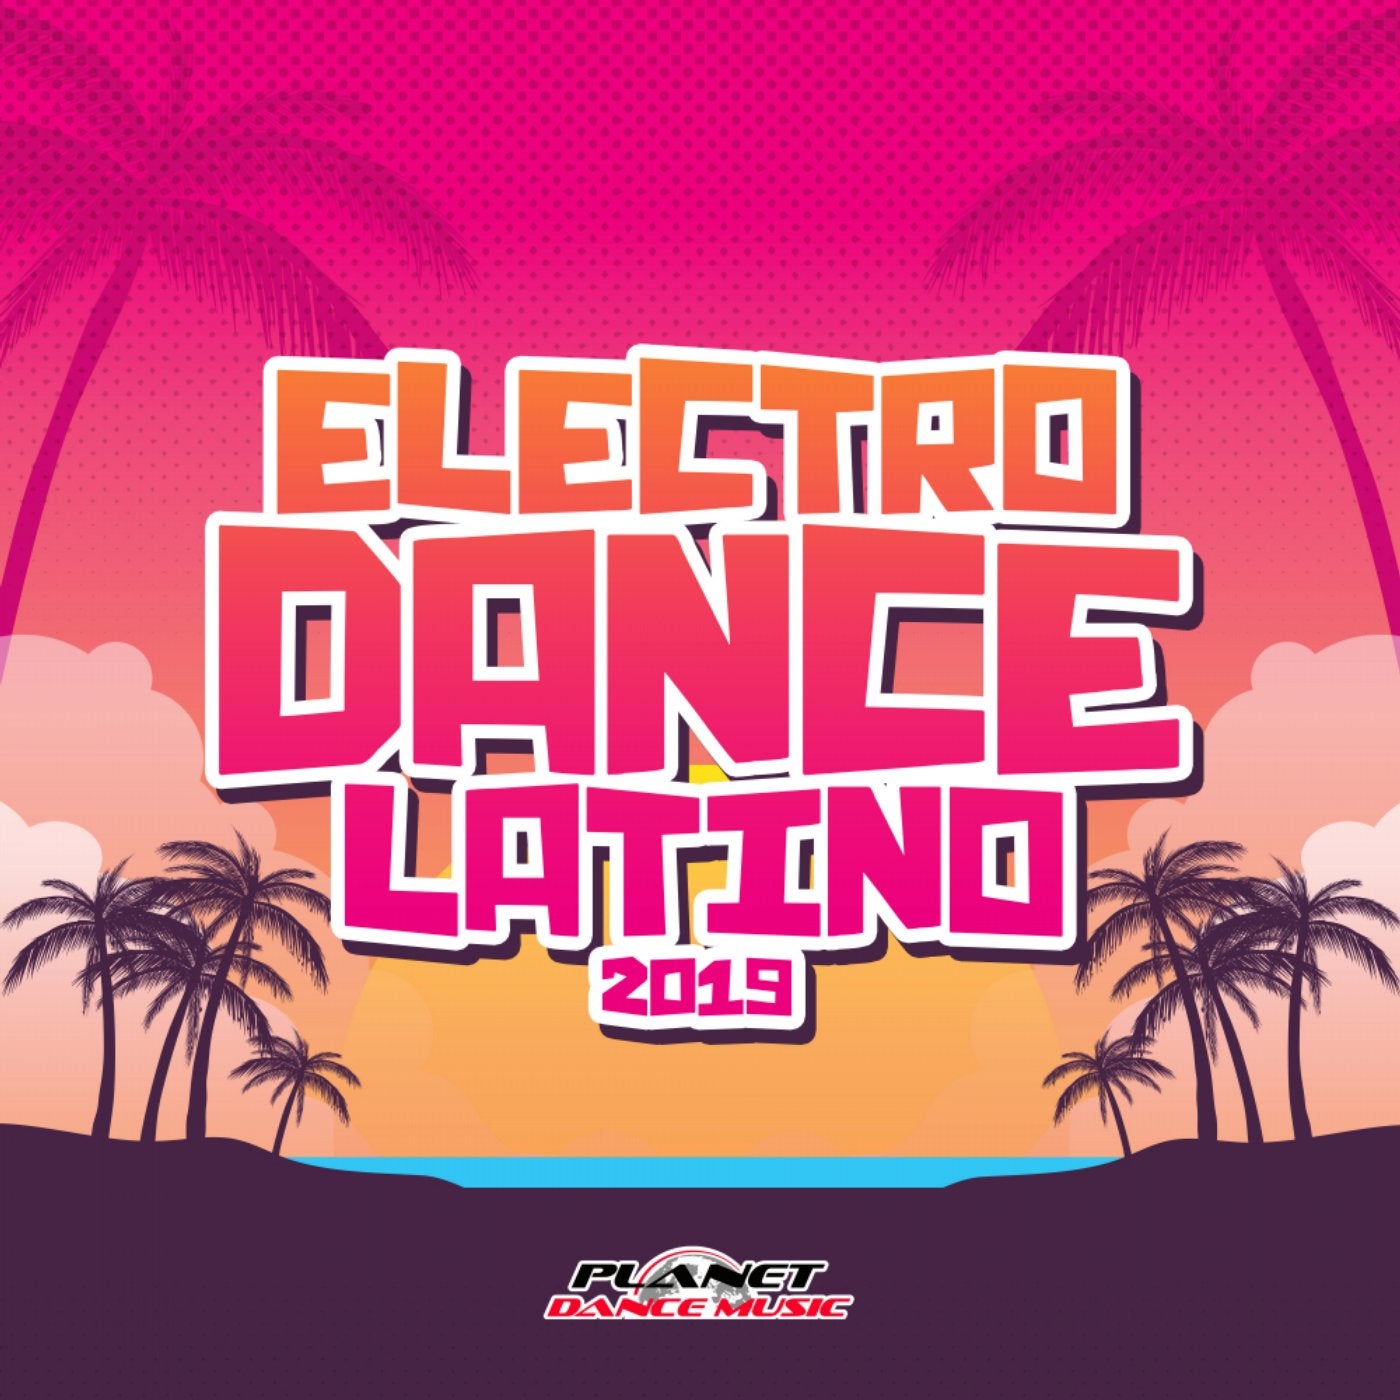 Electrodance Latino 2019